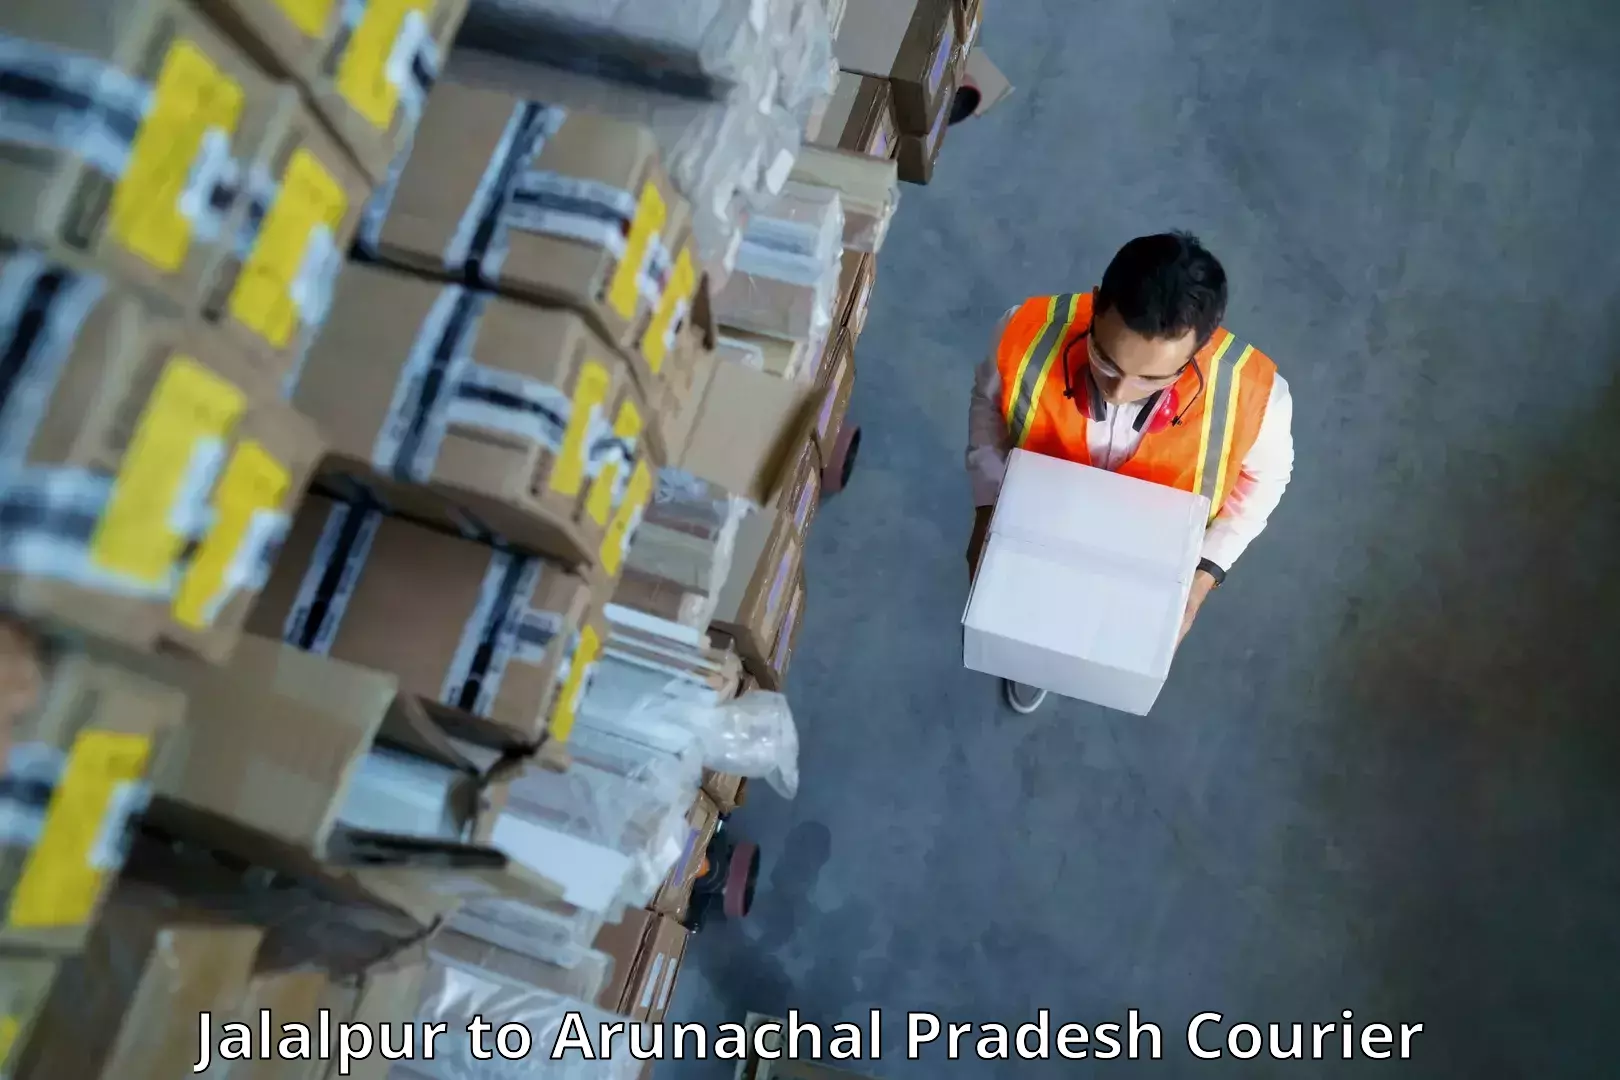 Global logistics network Jalalpur to Arunachal Pradesh